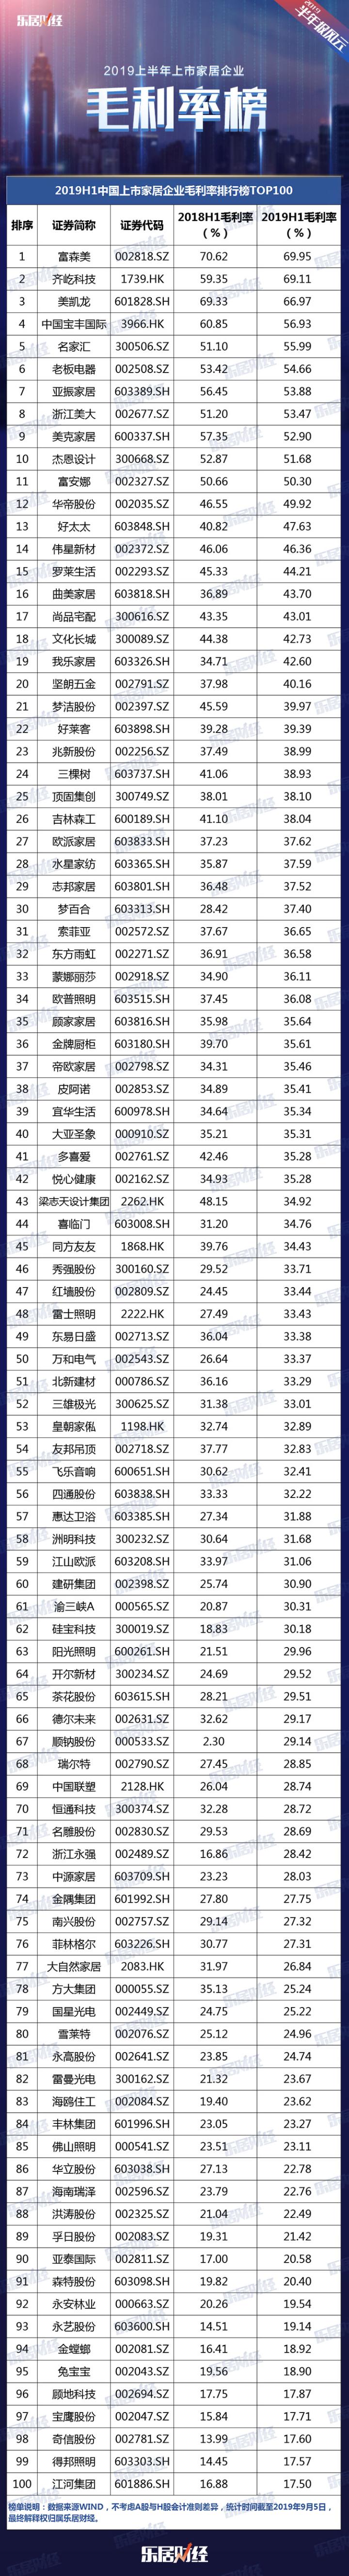 2019H1上市家企毛利率TOP100